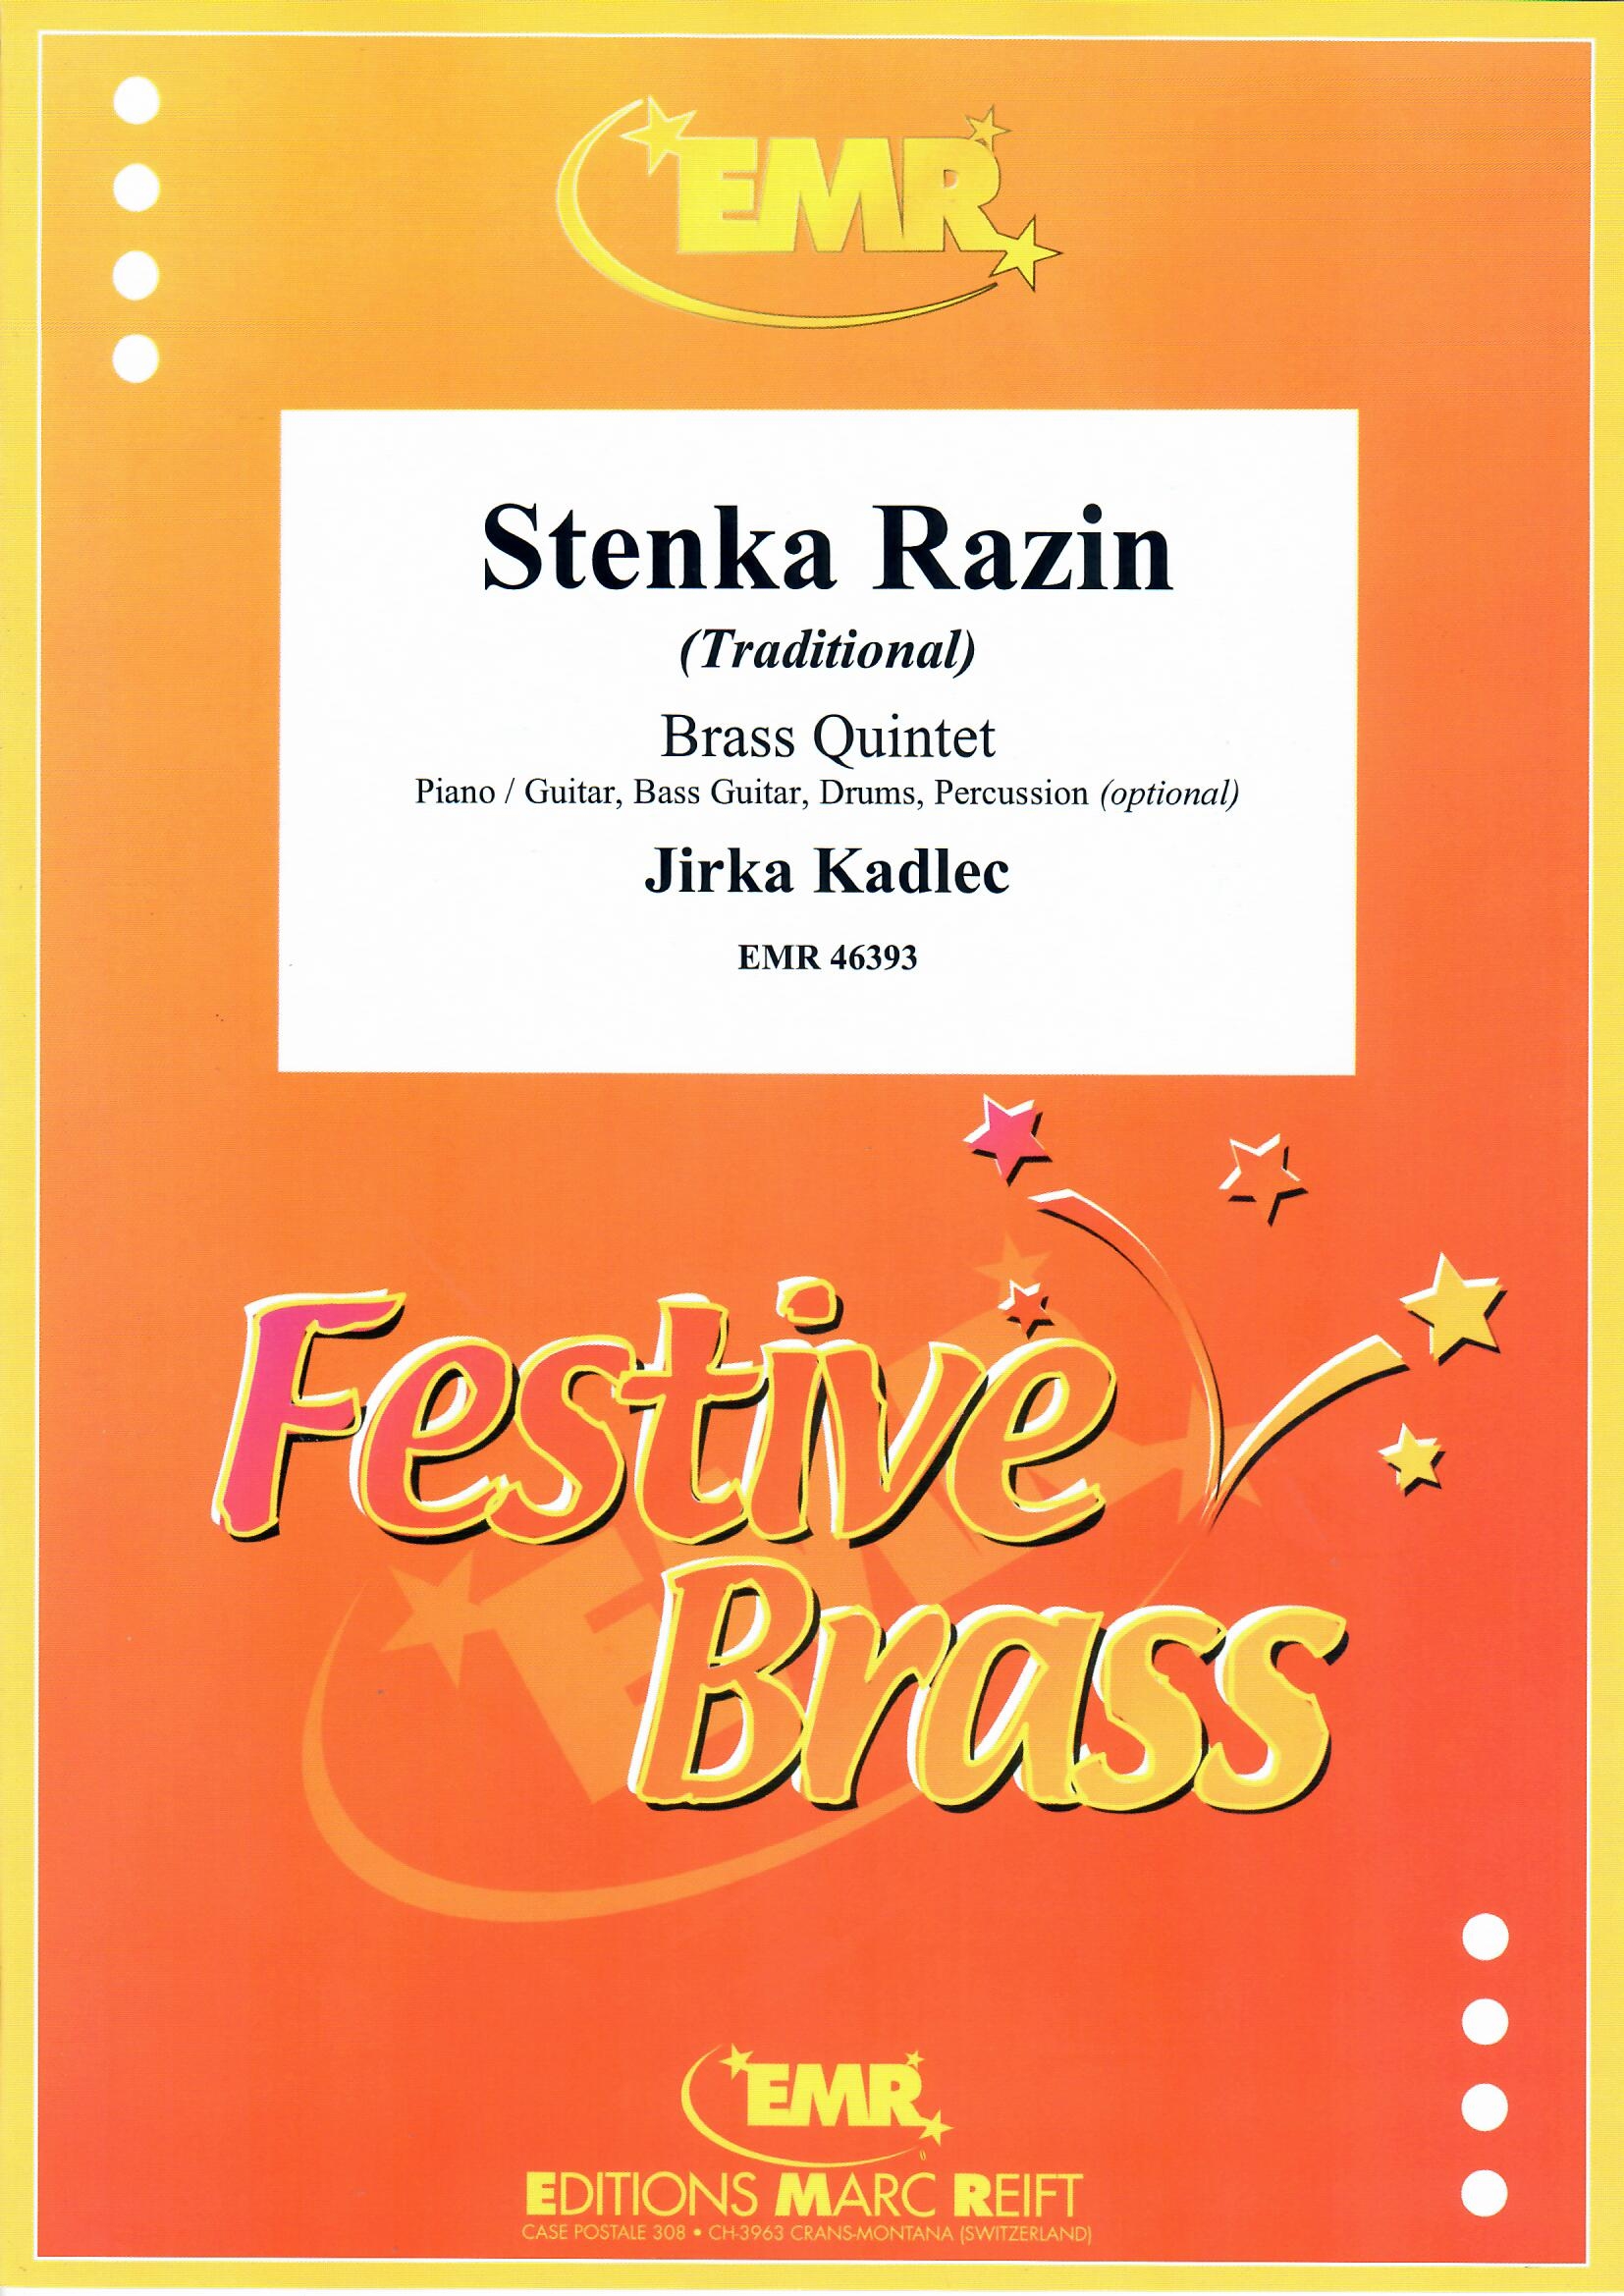 STENKA RAZIN, NEW & RECENT Publications, EMR Brass Quartets